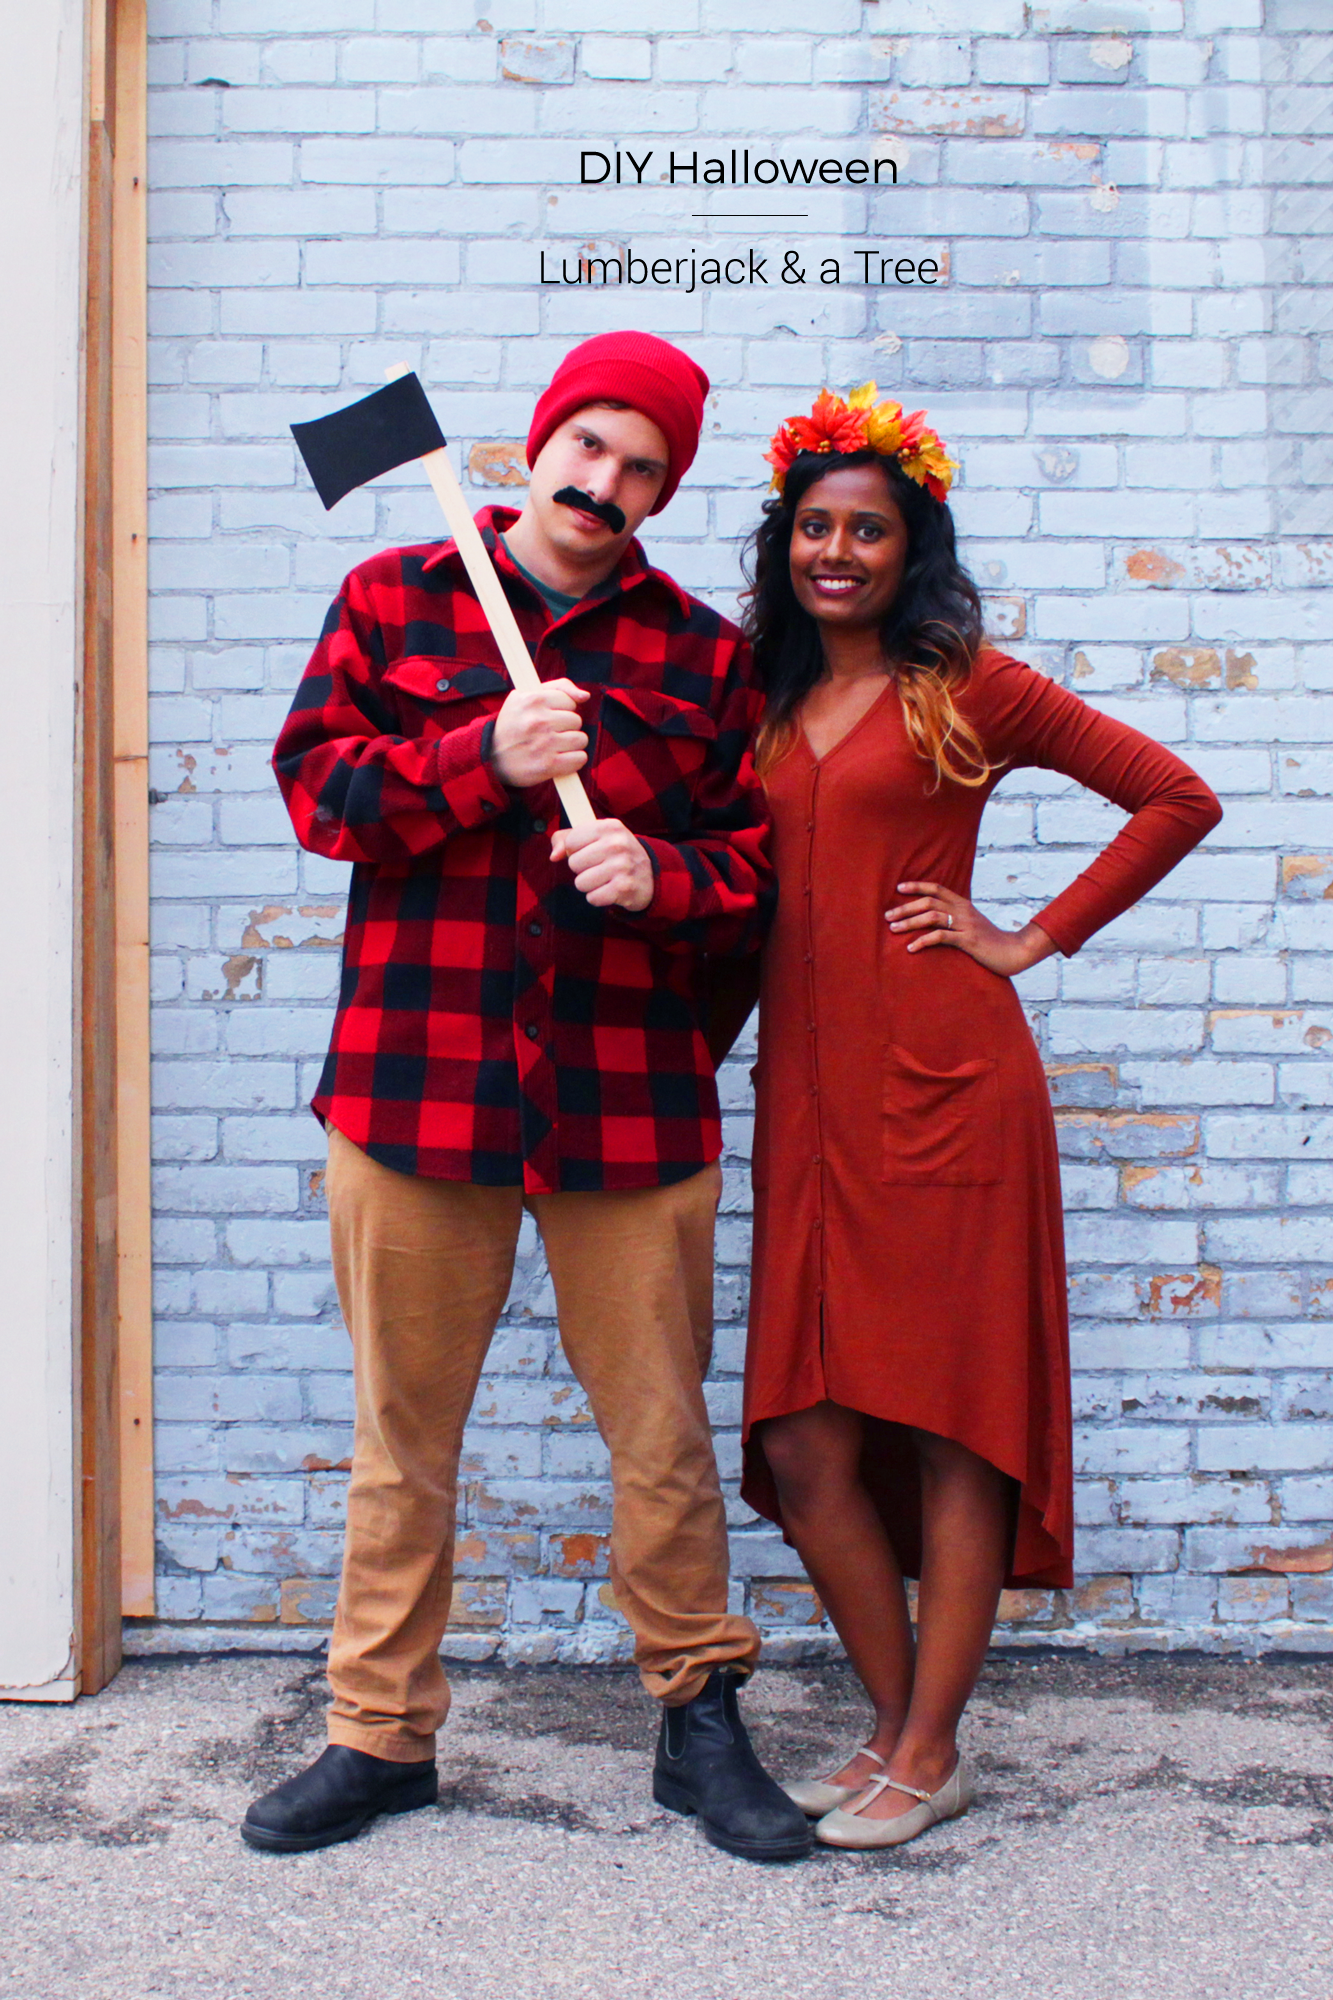 DIY Halloween Couples Costume | Lumberjack & a Tree | Fish & Bull